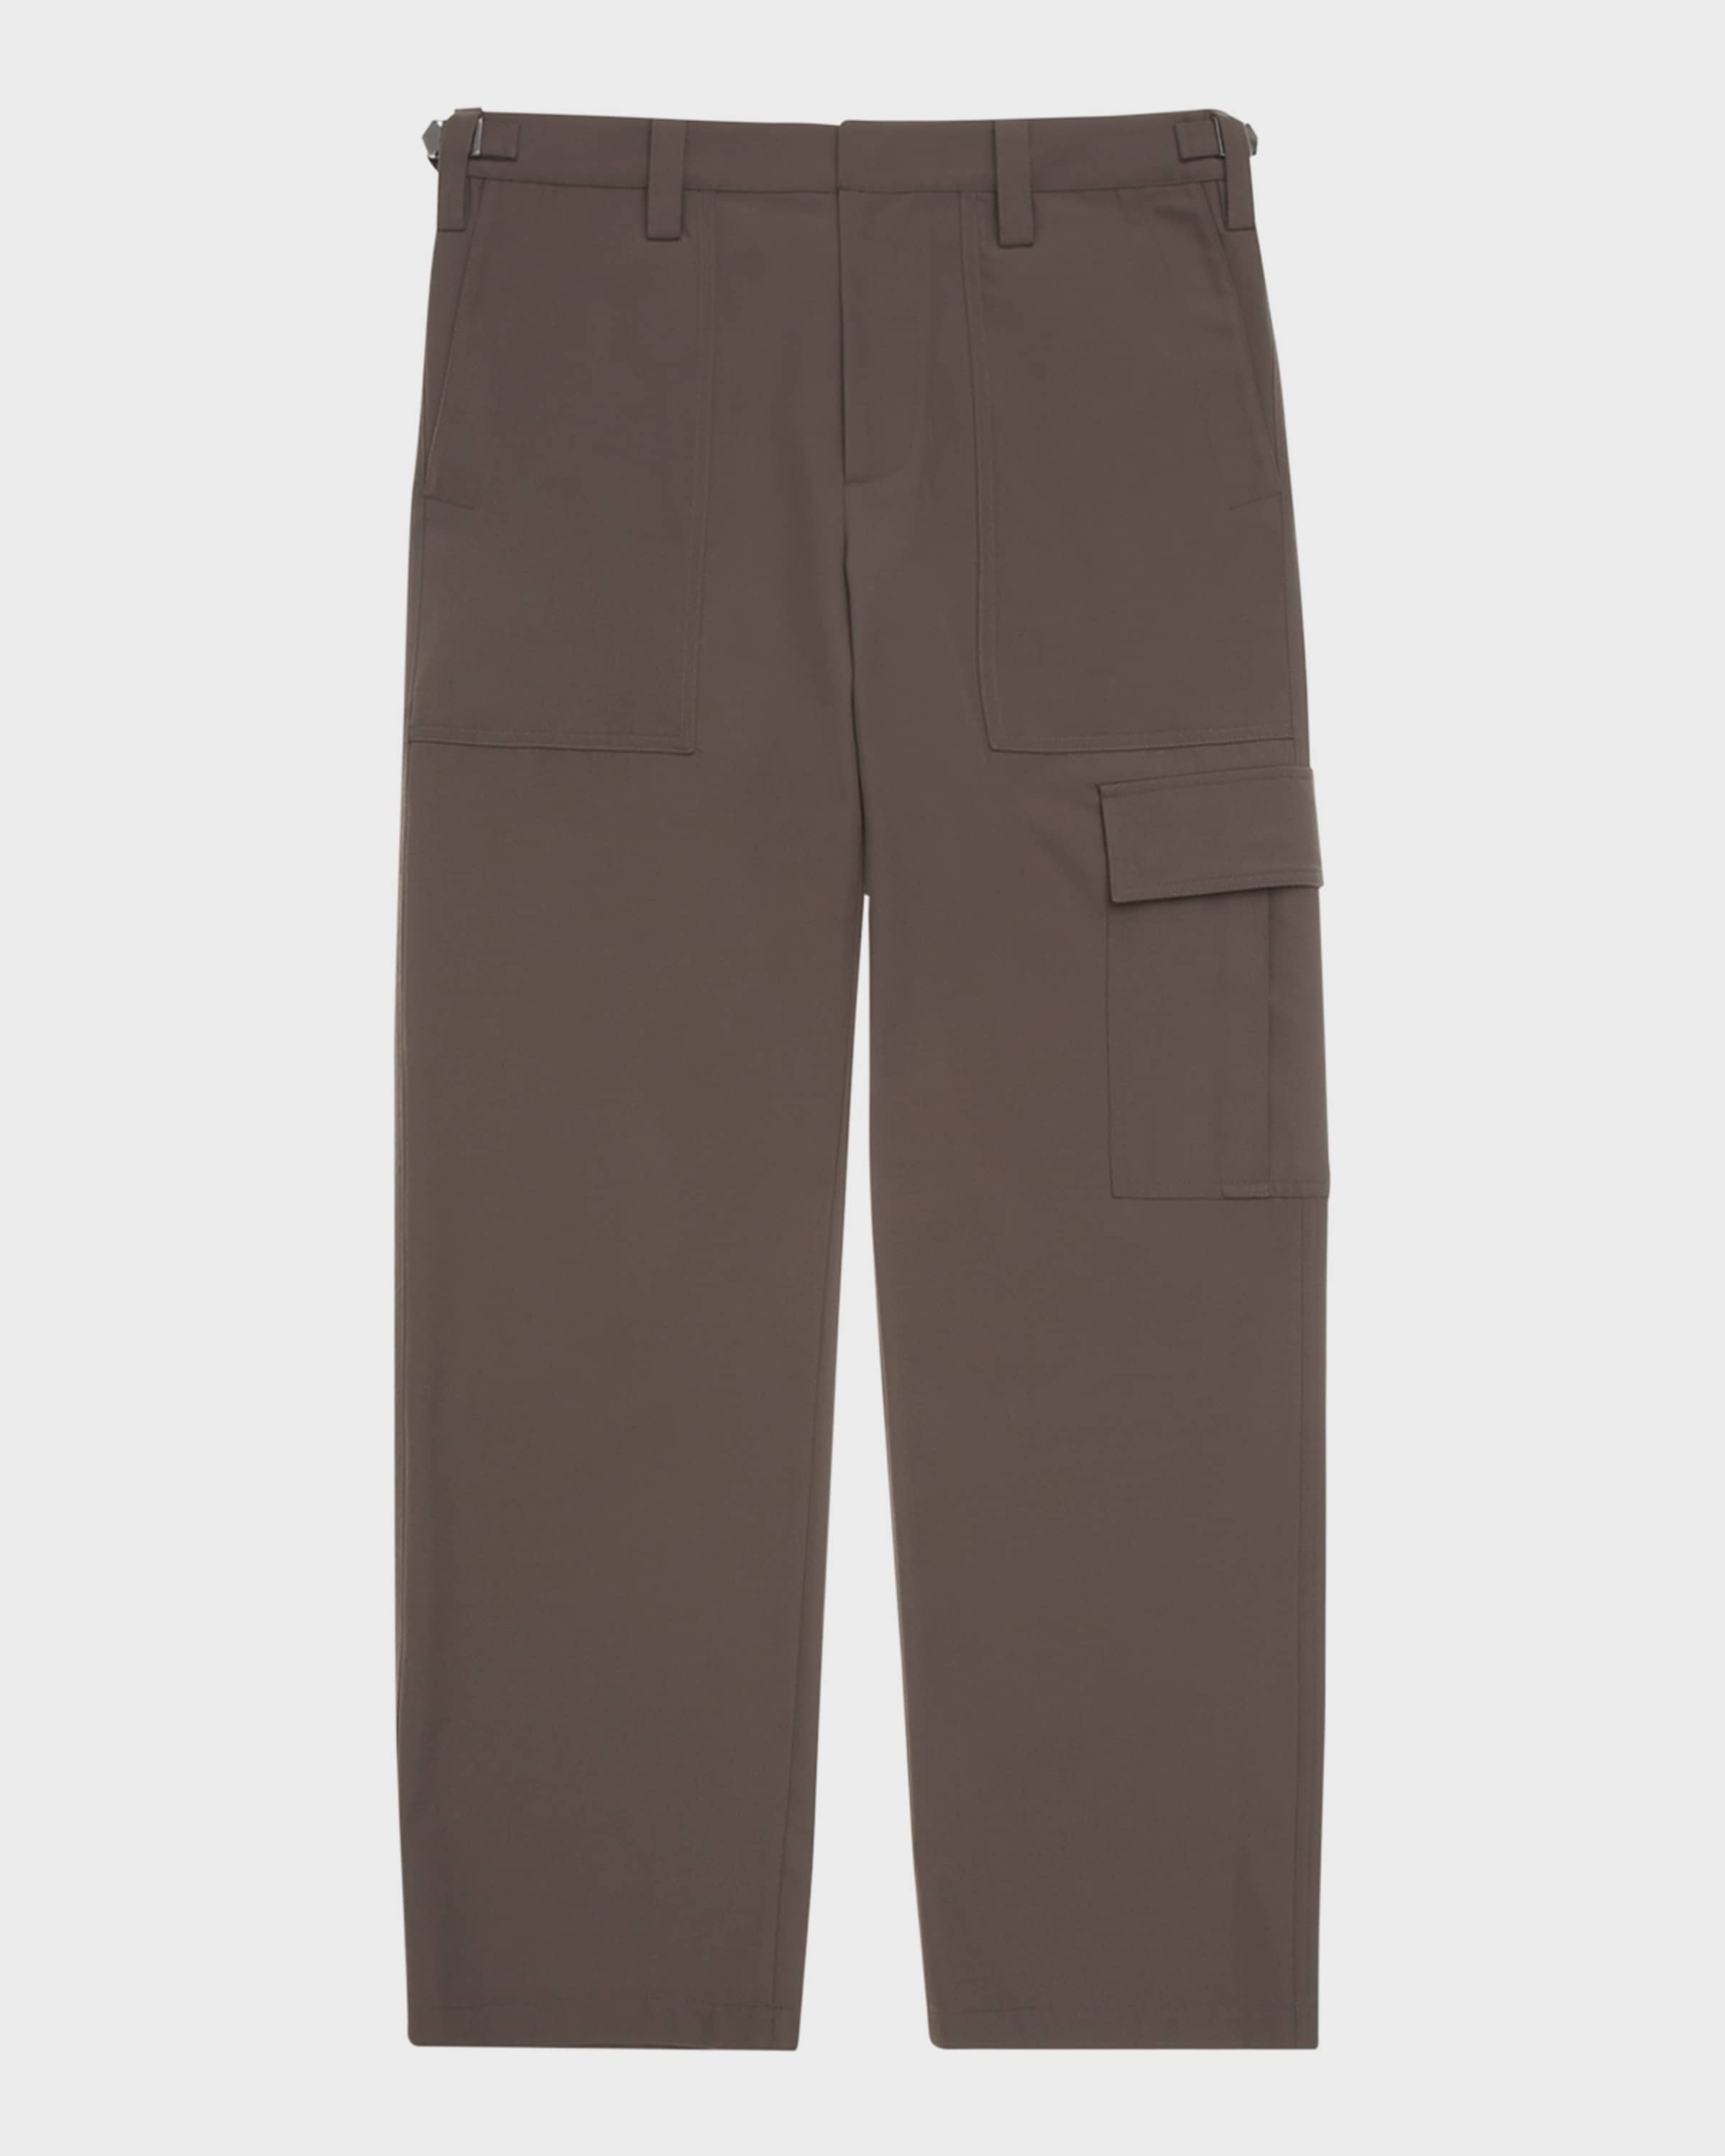 Men's Twill Military Pants - 1